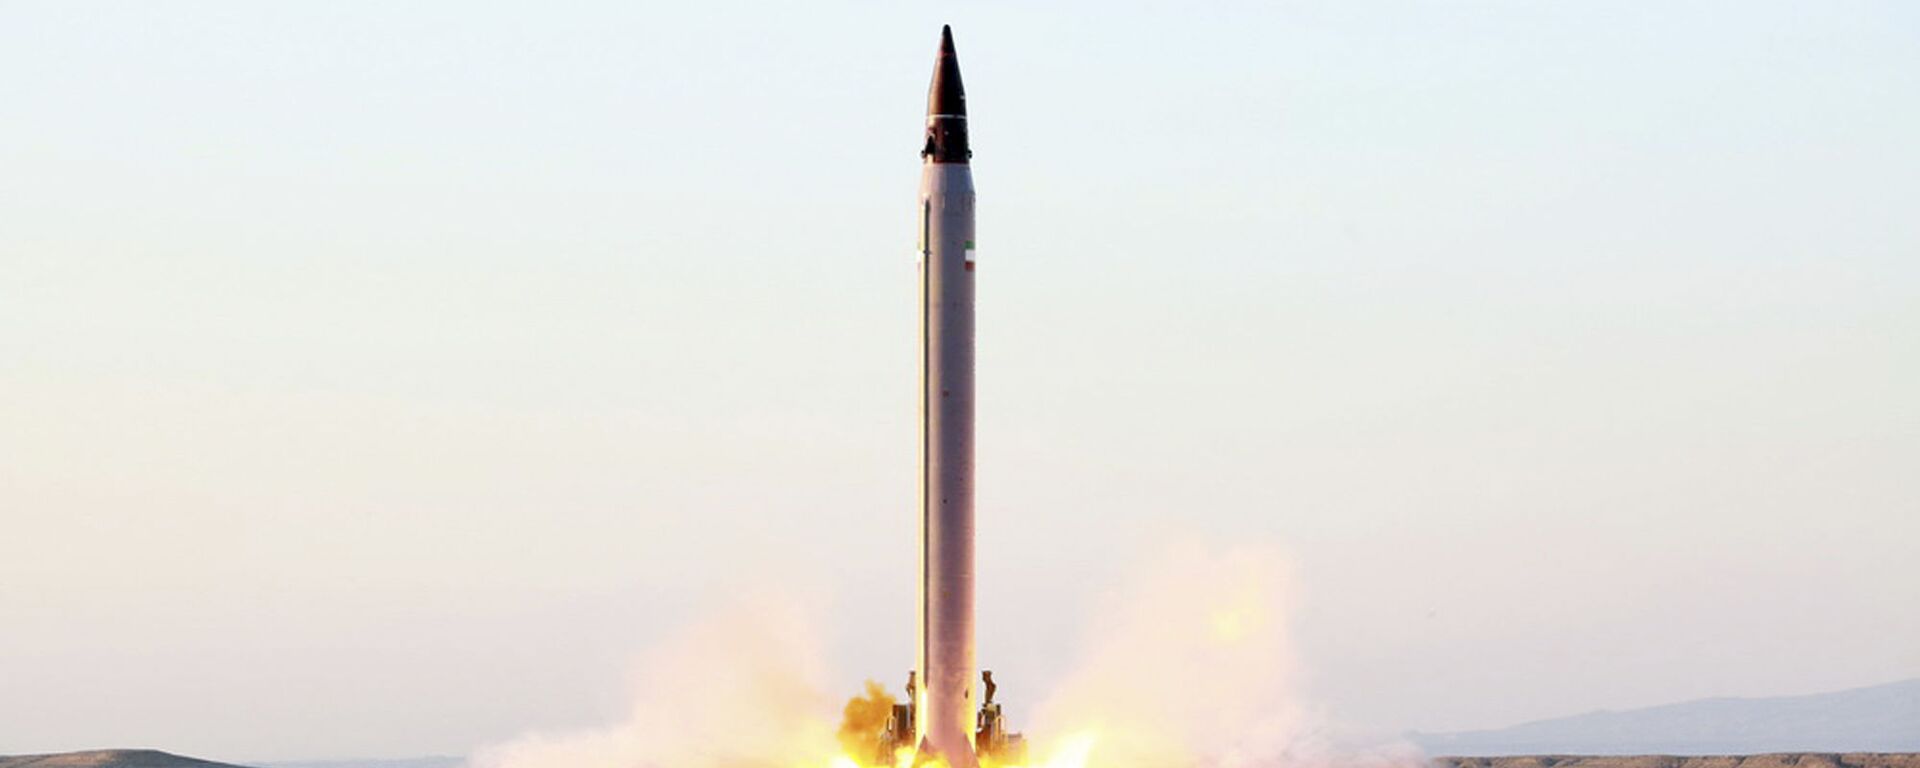 إطلاق صاروخ بالستي إيراني - سبوتنيك عربي, 1920, 29.01.2022